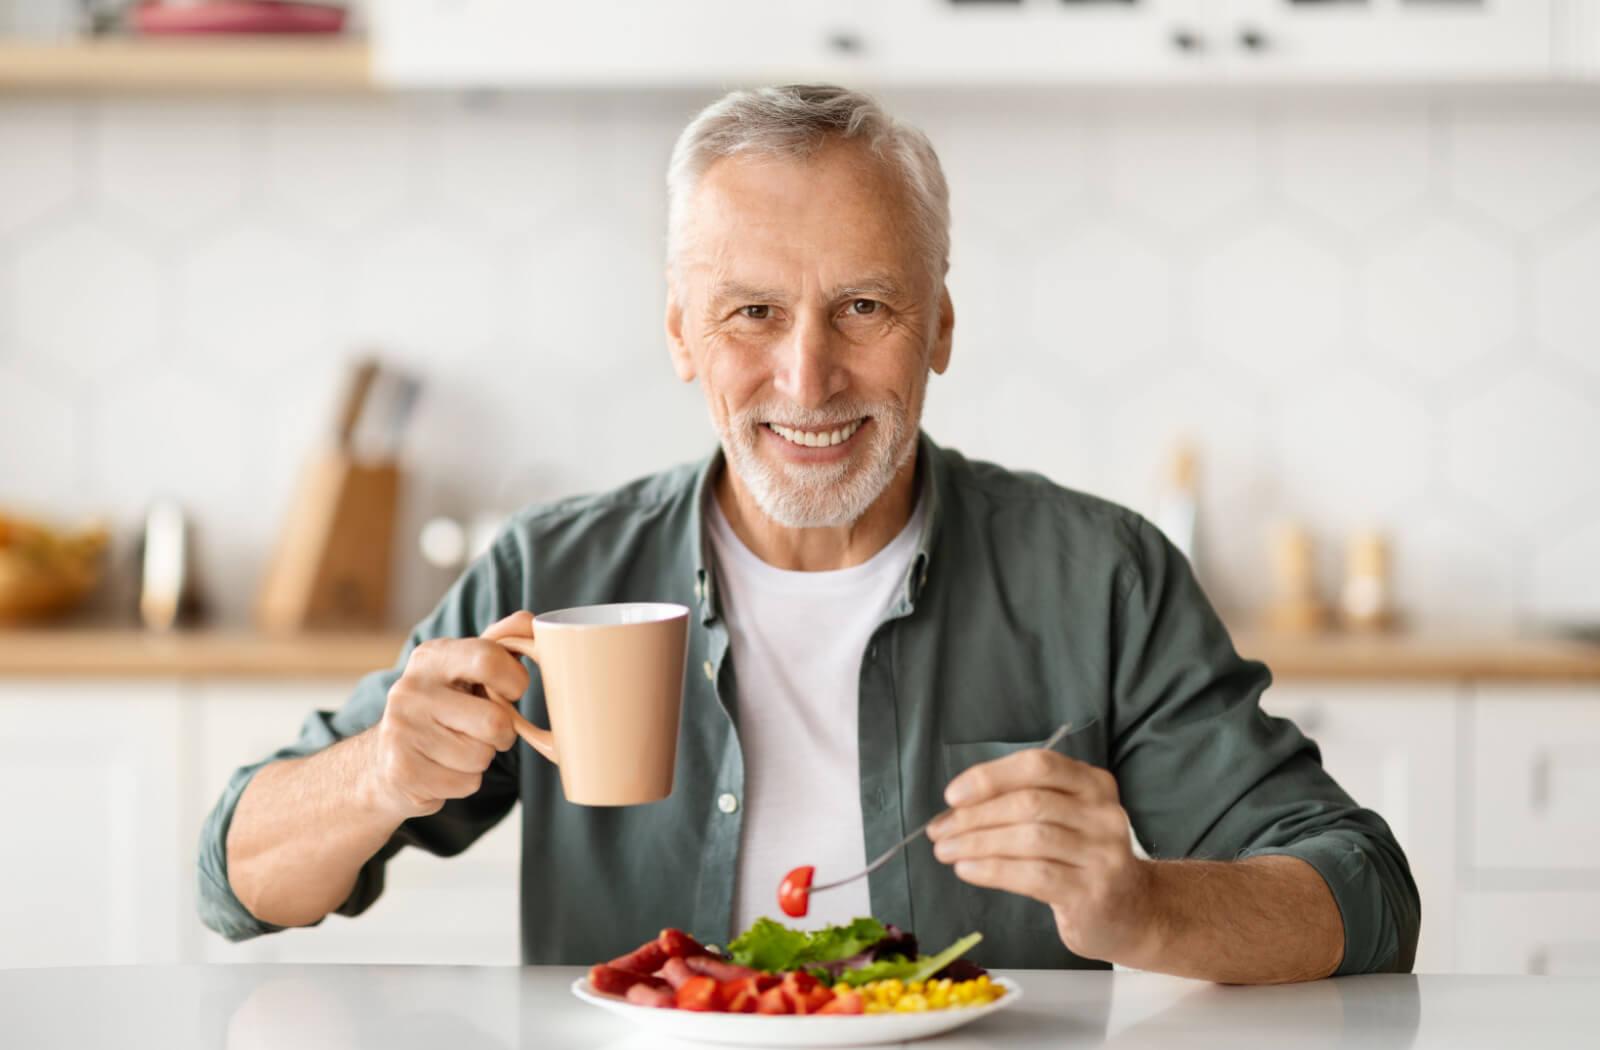 An older adult man enjoying a healthy meal.